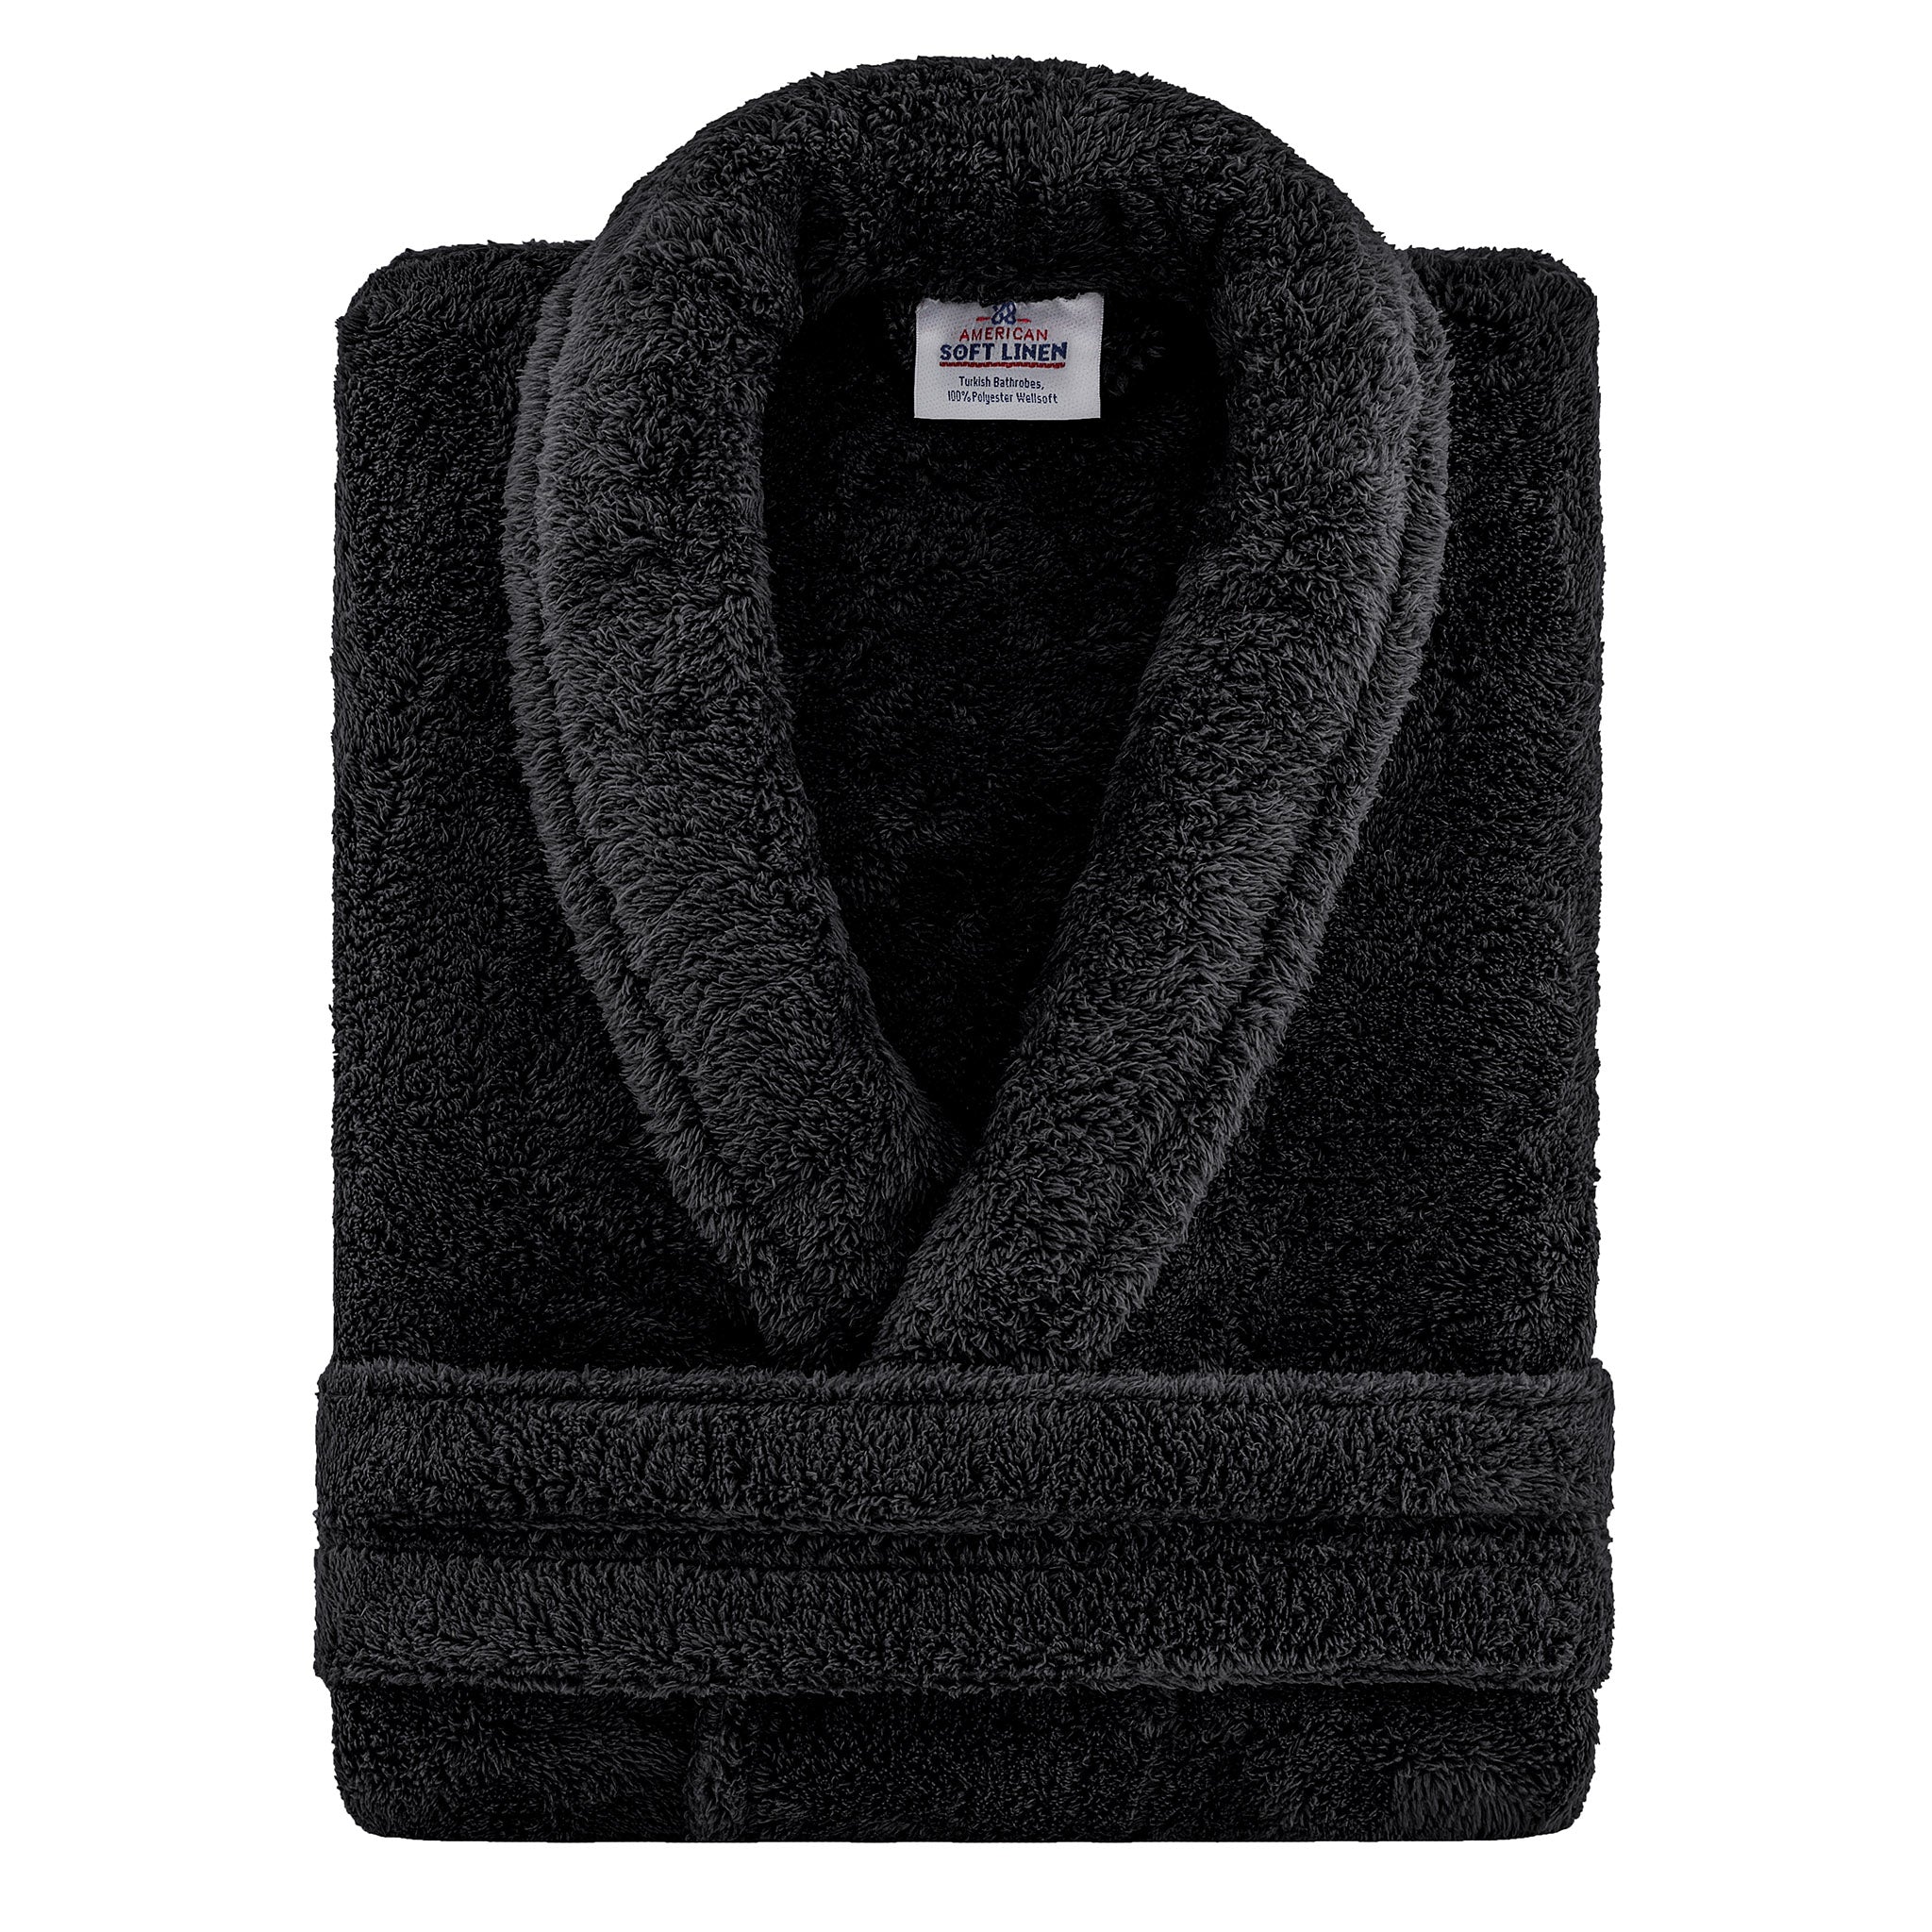 American Soft Linen Super Soft Absorbent and Fluffy Unisex Fleece Bathrobe -12 Set Case Pack -S-M-black-3